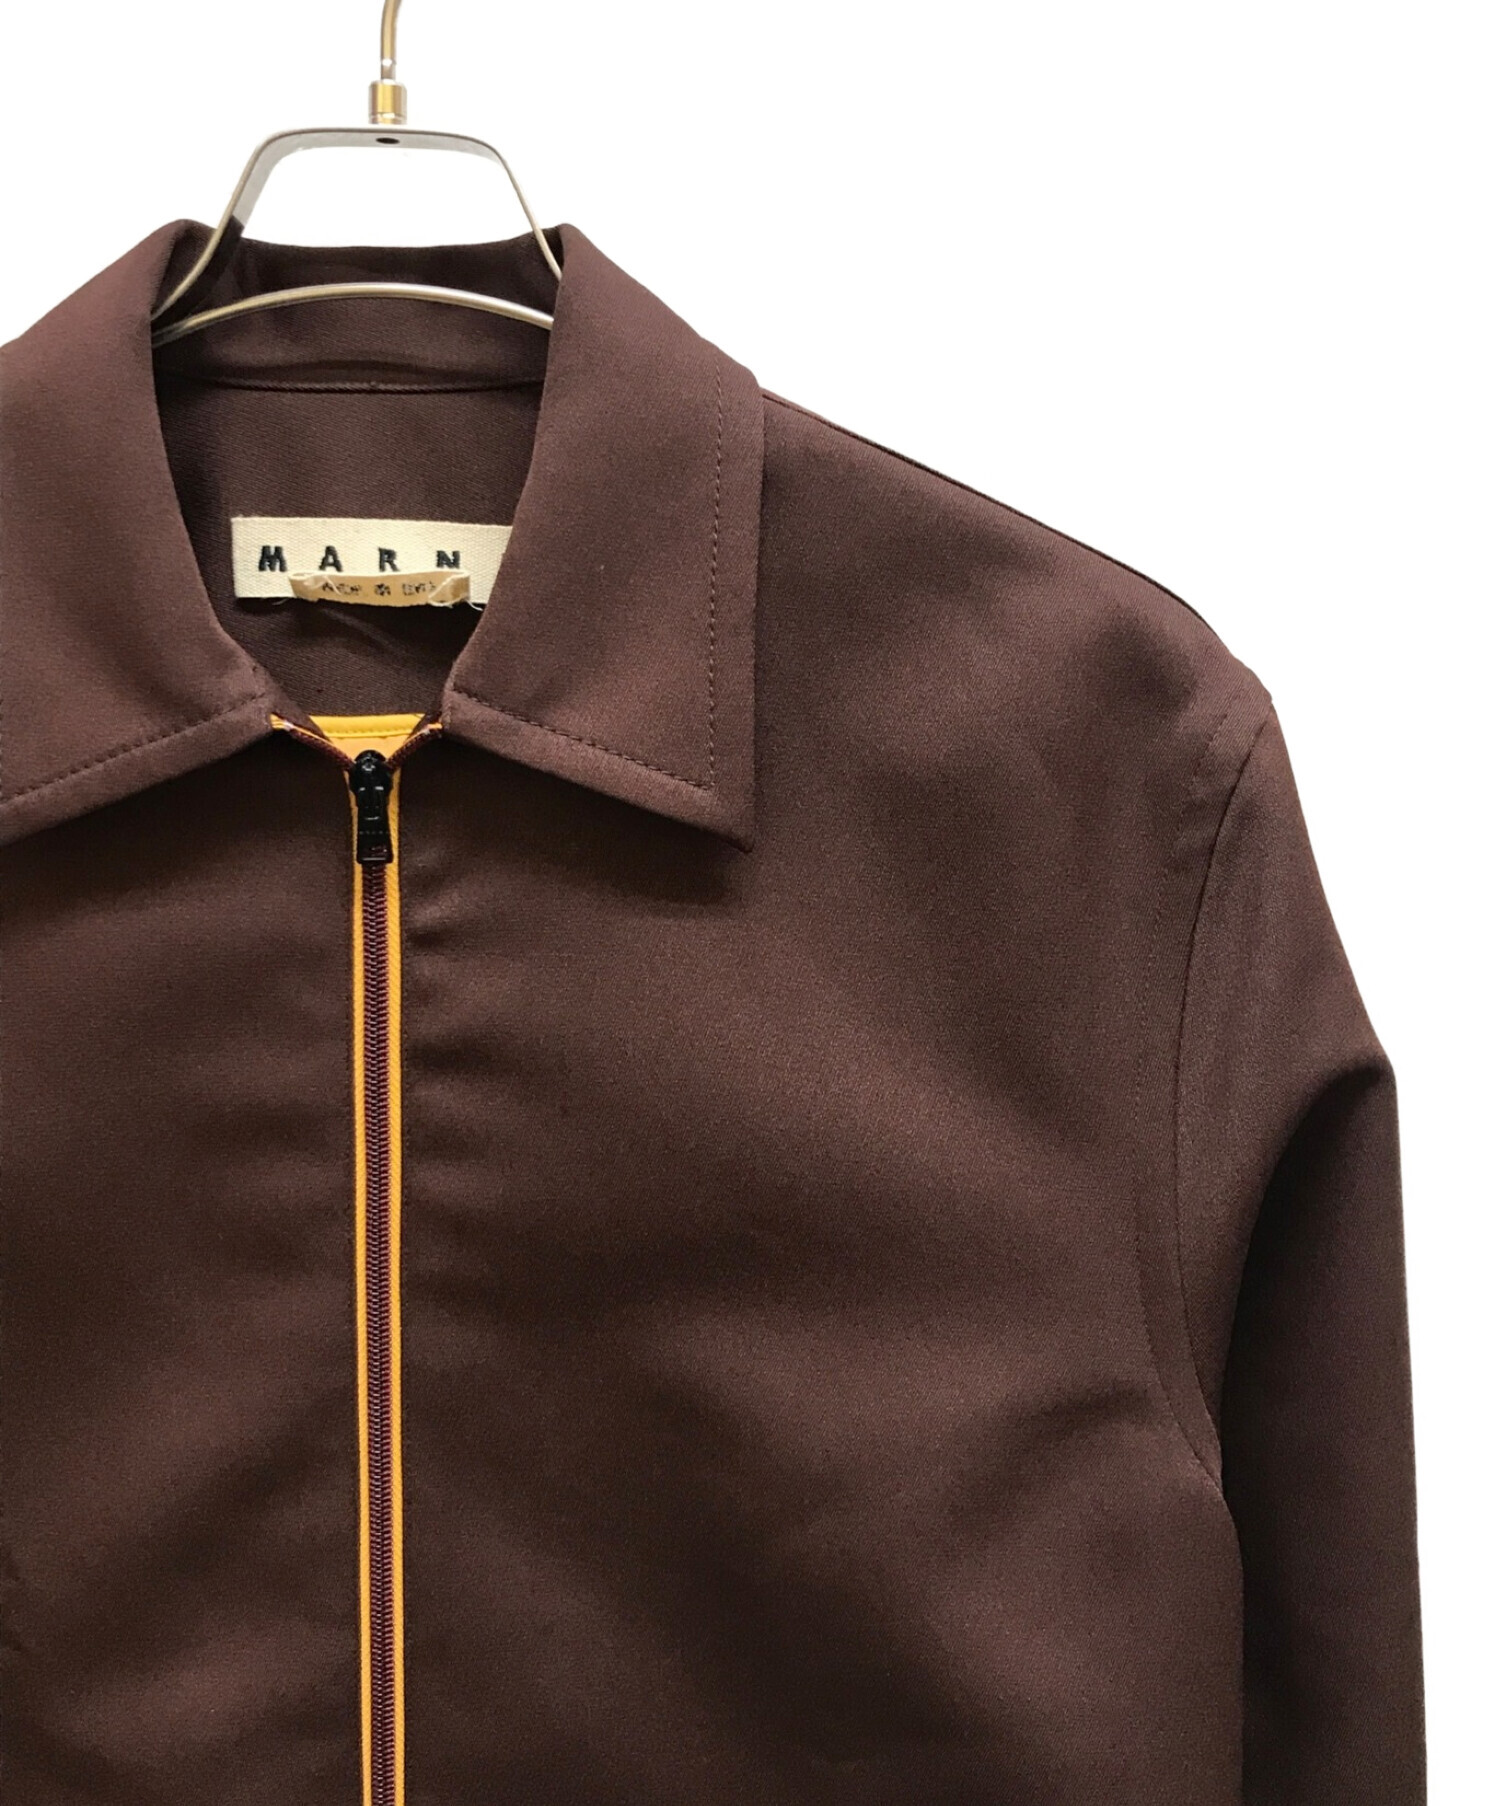 MARNI (マルニ) Zipped Technical Jacket カーキ サイズ:44